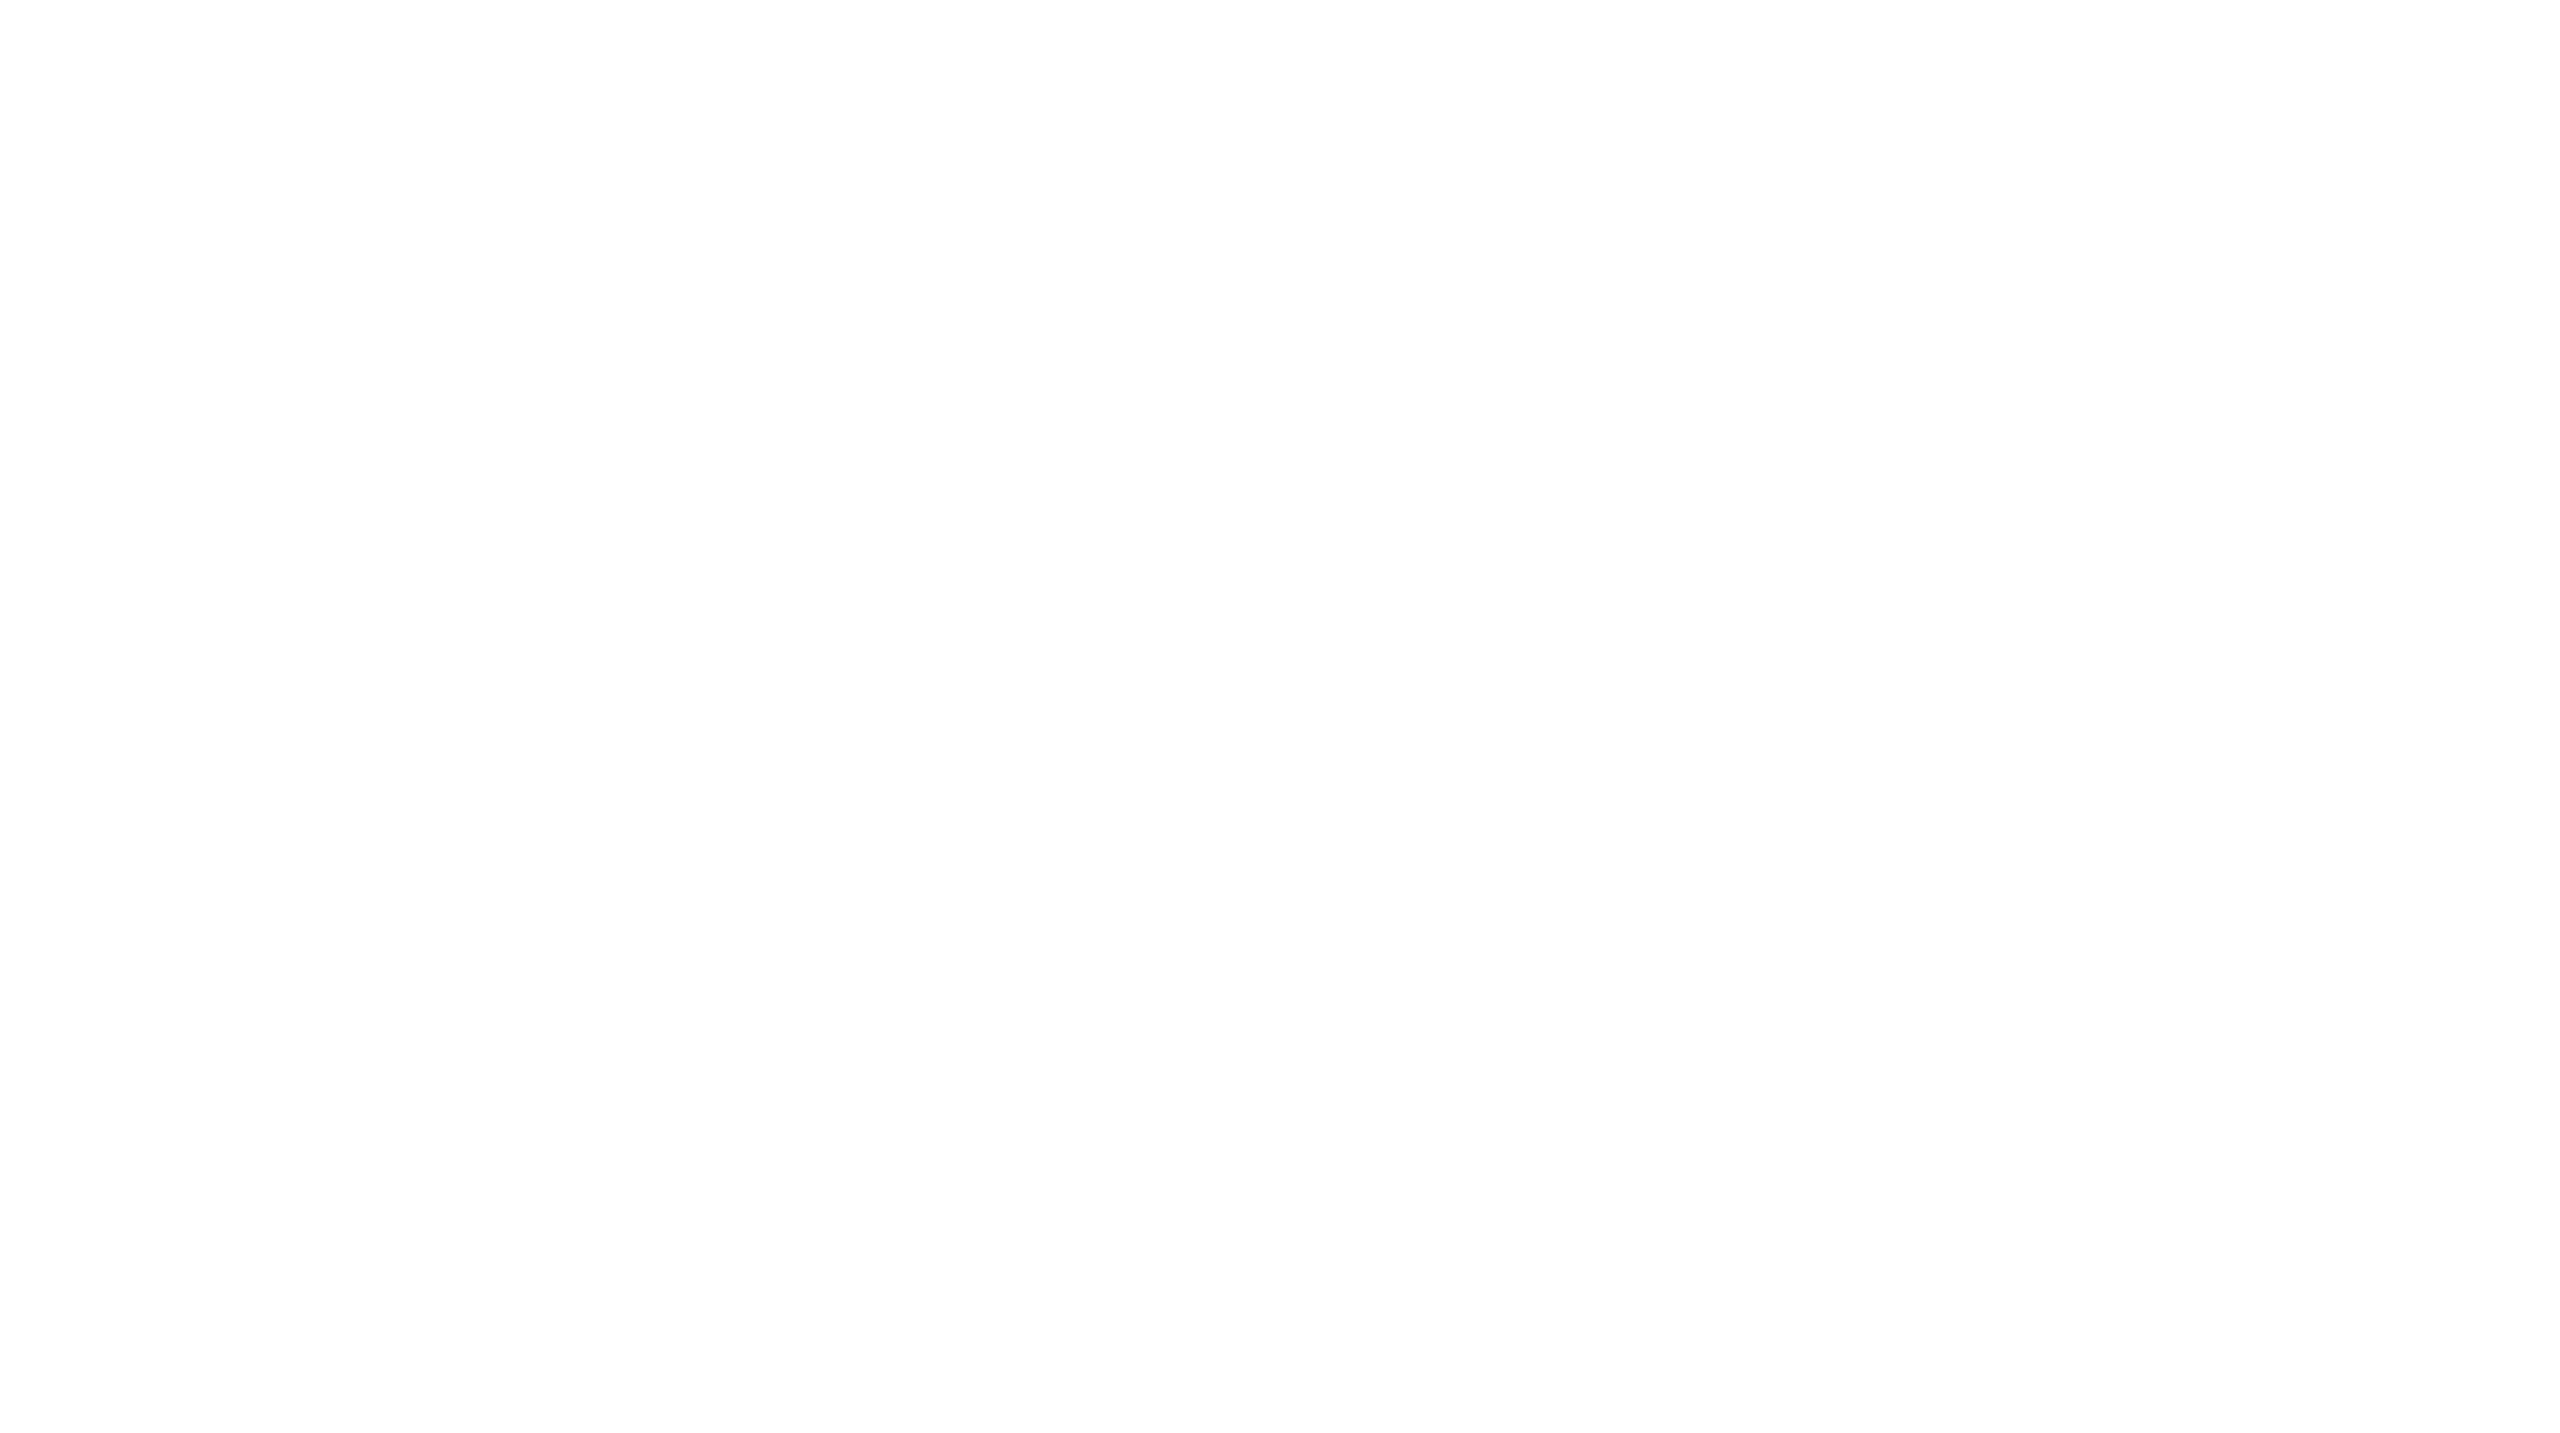 Swimbrite Swimming School logo